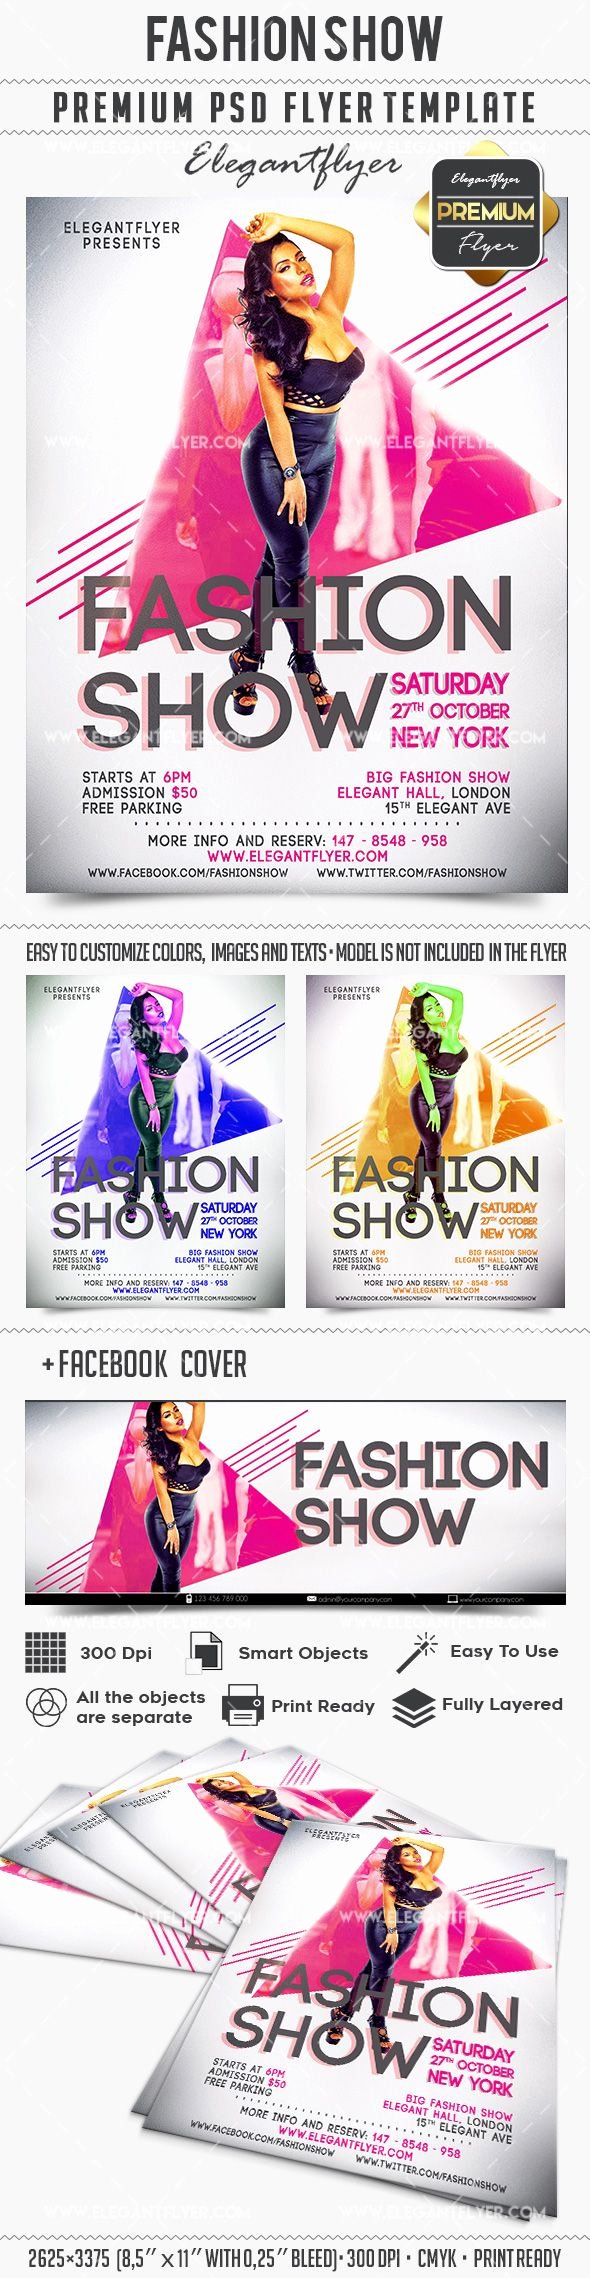 Fashion Show Flyer Template New Fashion Show Invitation Flyer Template – by Elegantflyer